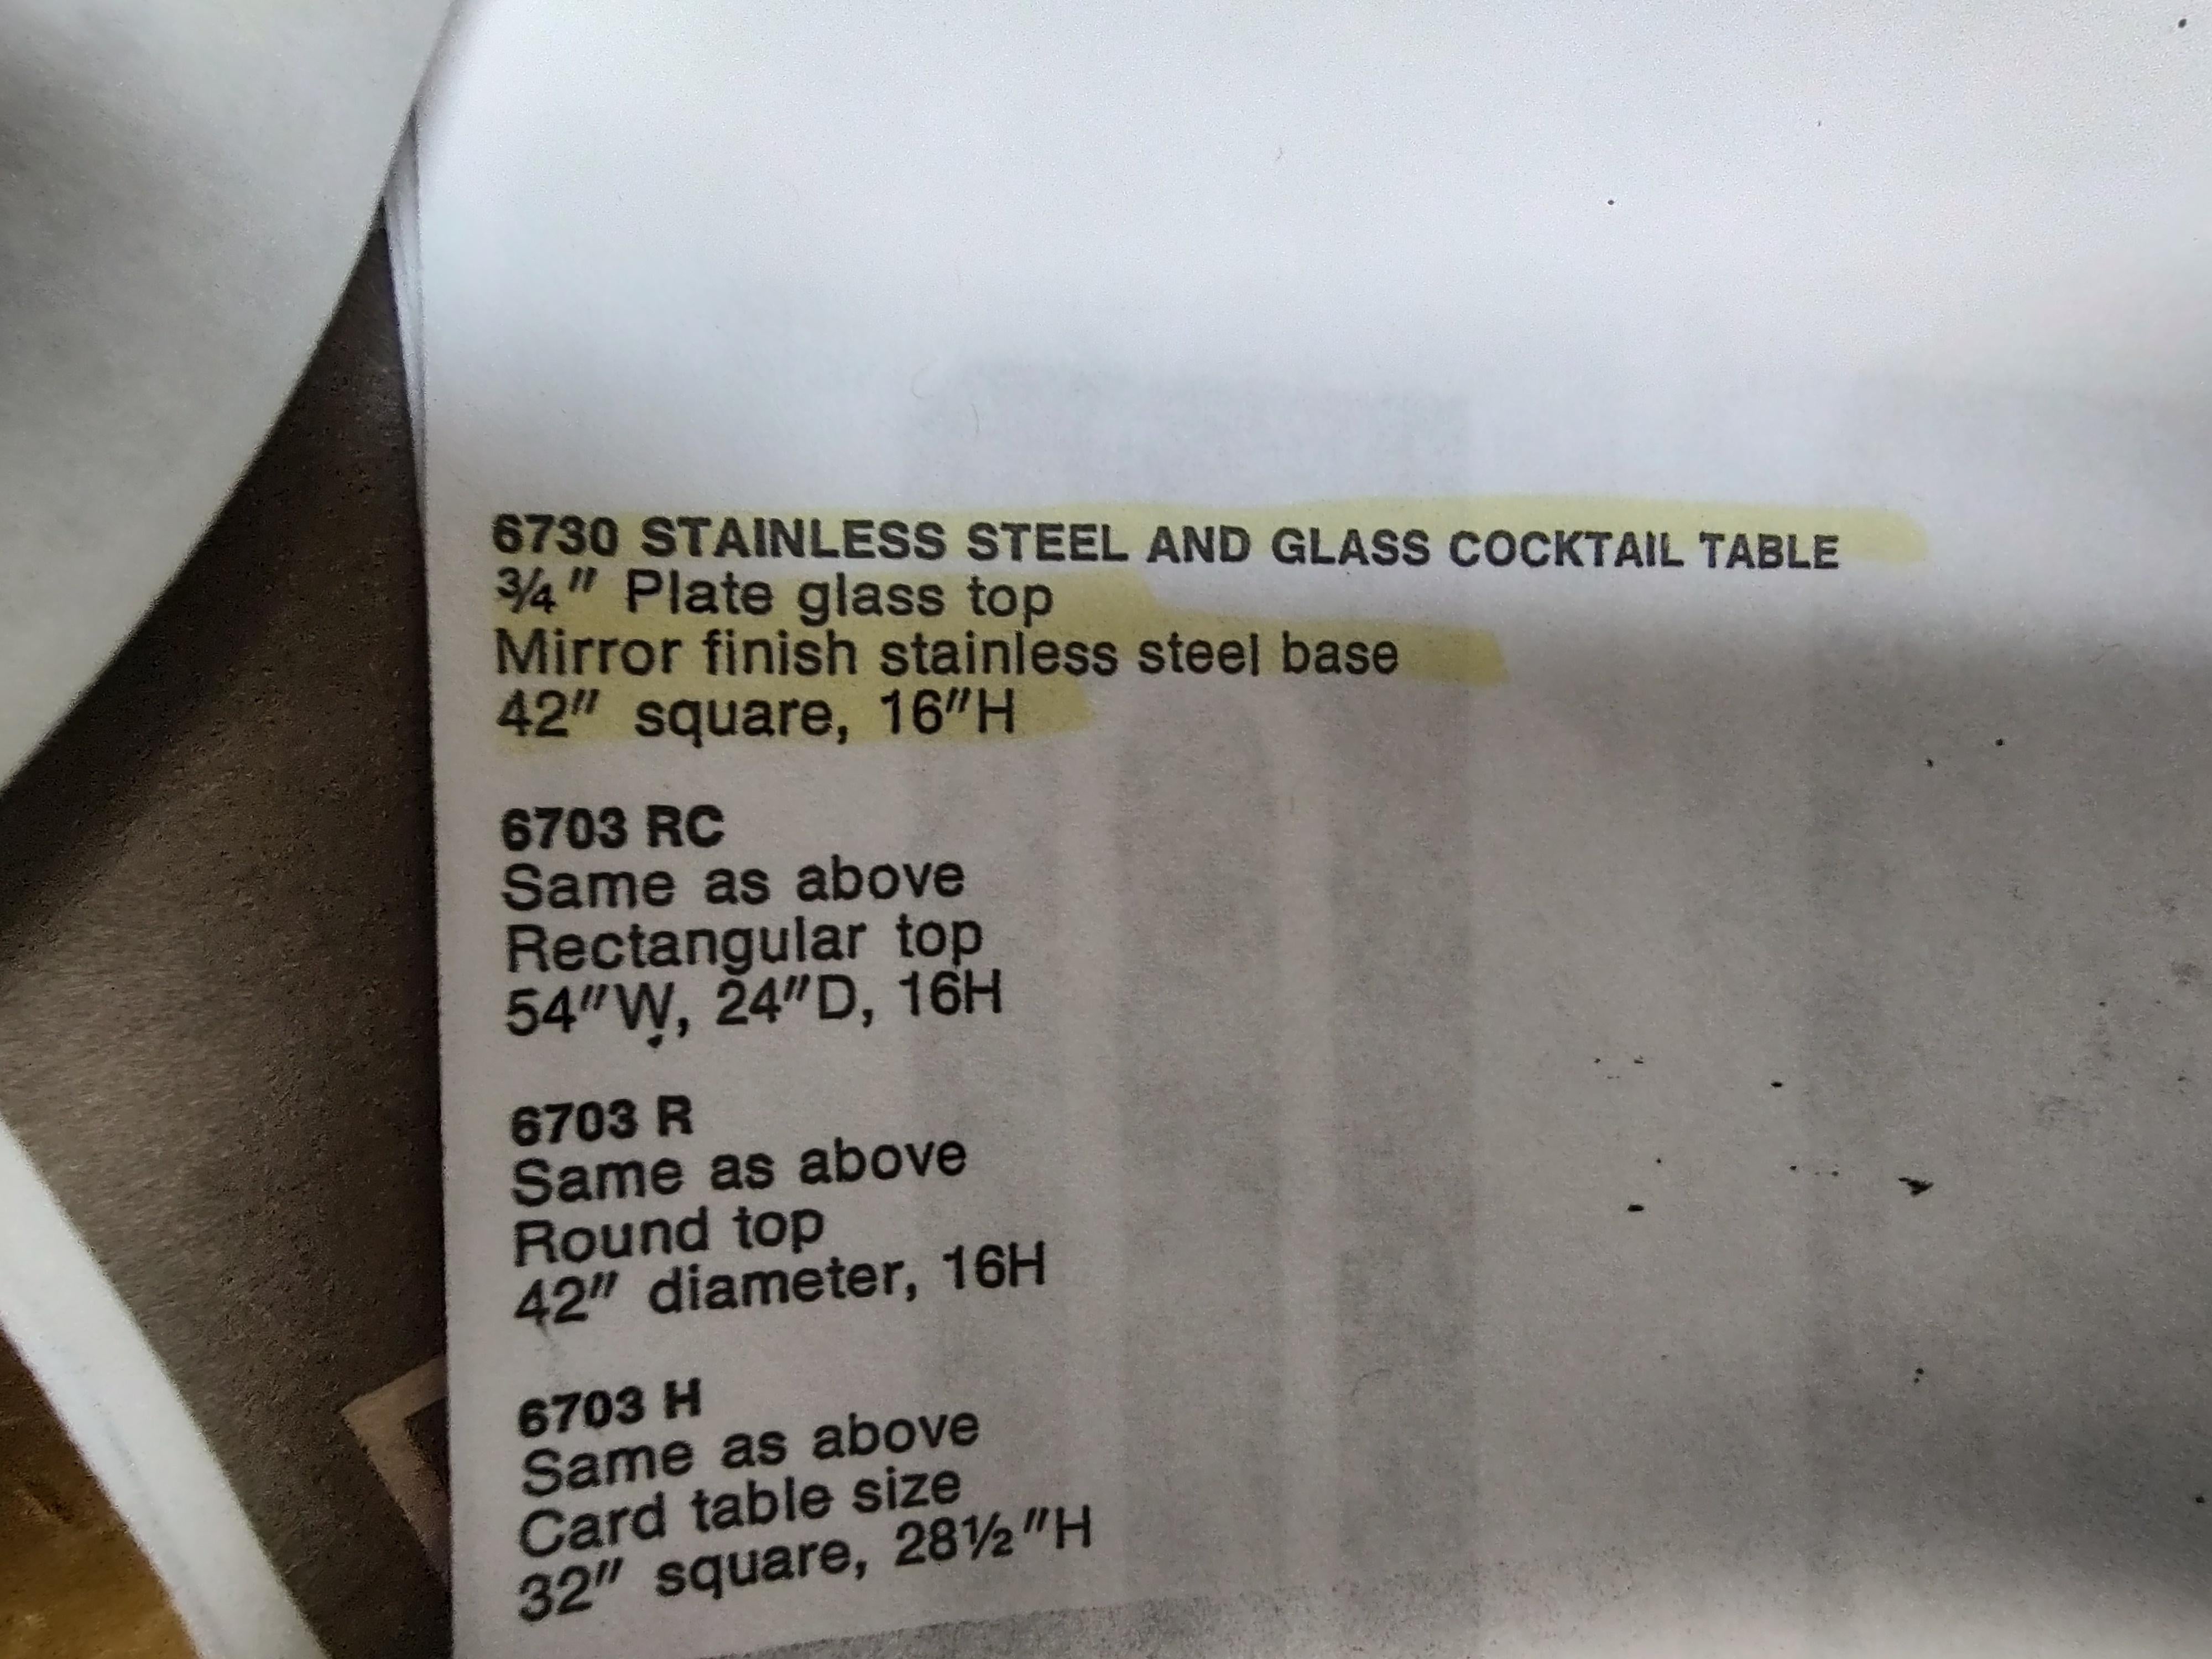 Mid-Century Modern Cocktail Table by Vladimir Kagan # 6703 Glass & Chrome Base For Sale 1